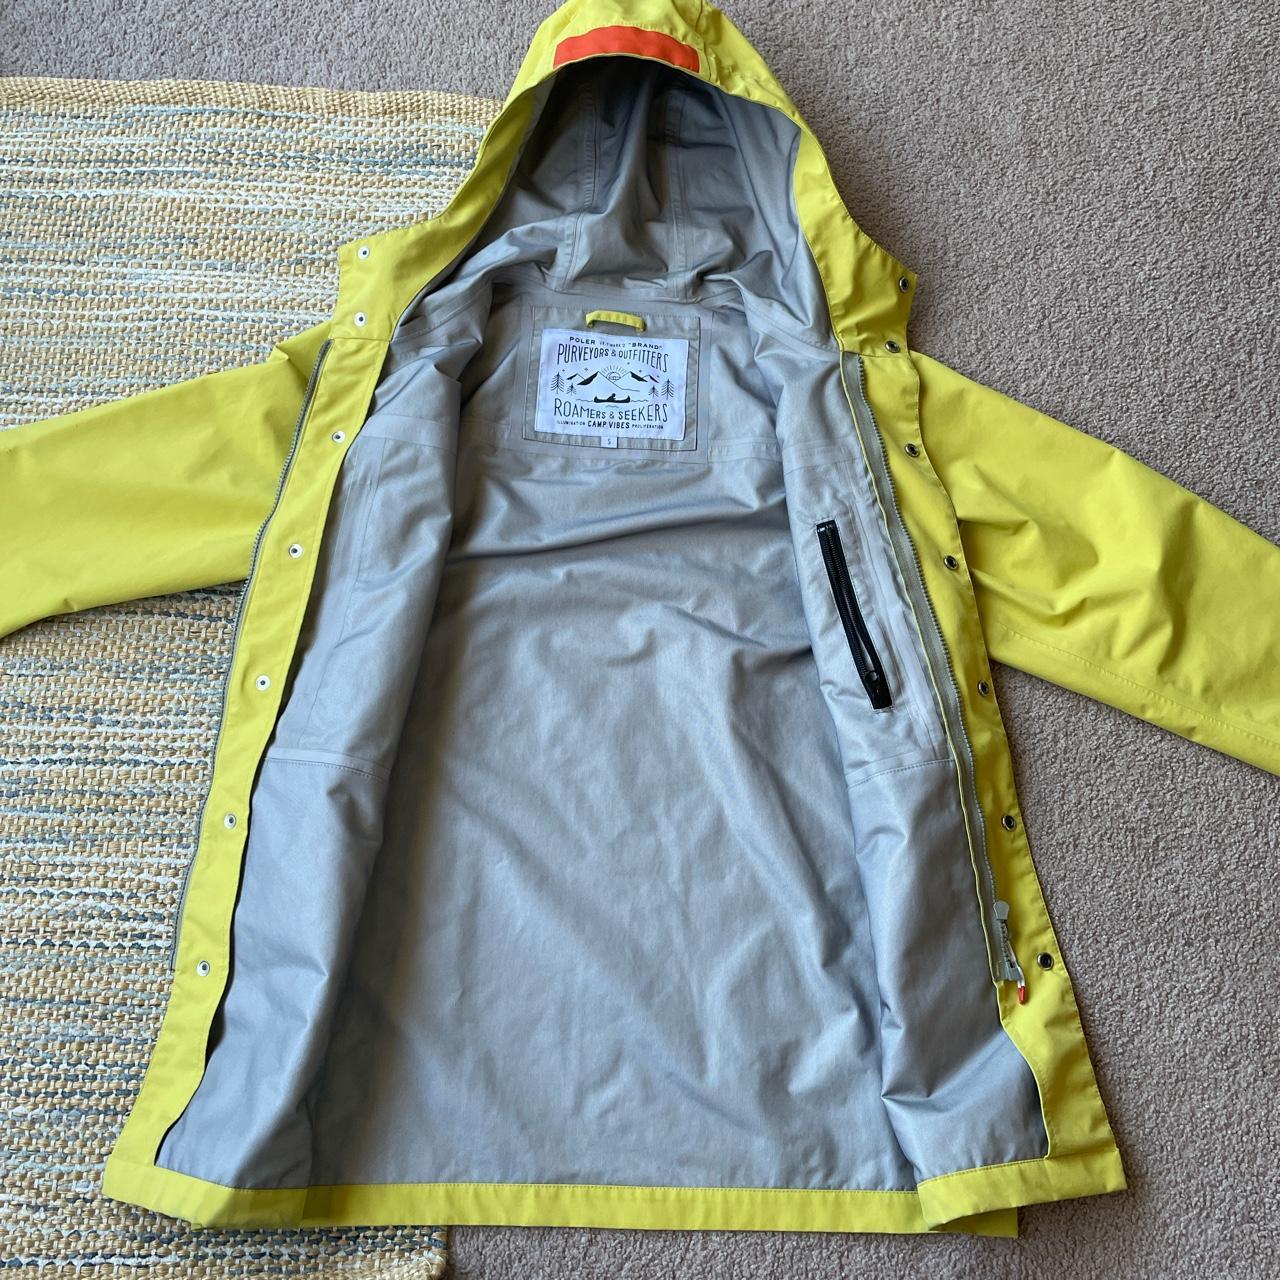 Product Image 4 - Poler Duck rain jacket
Simple, retro